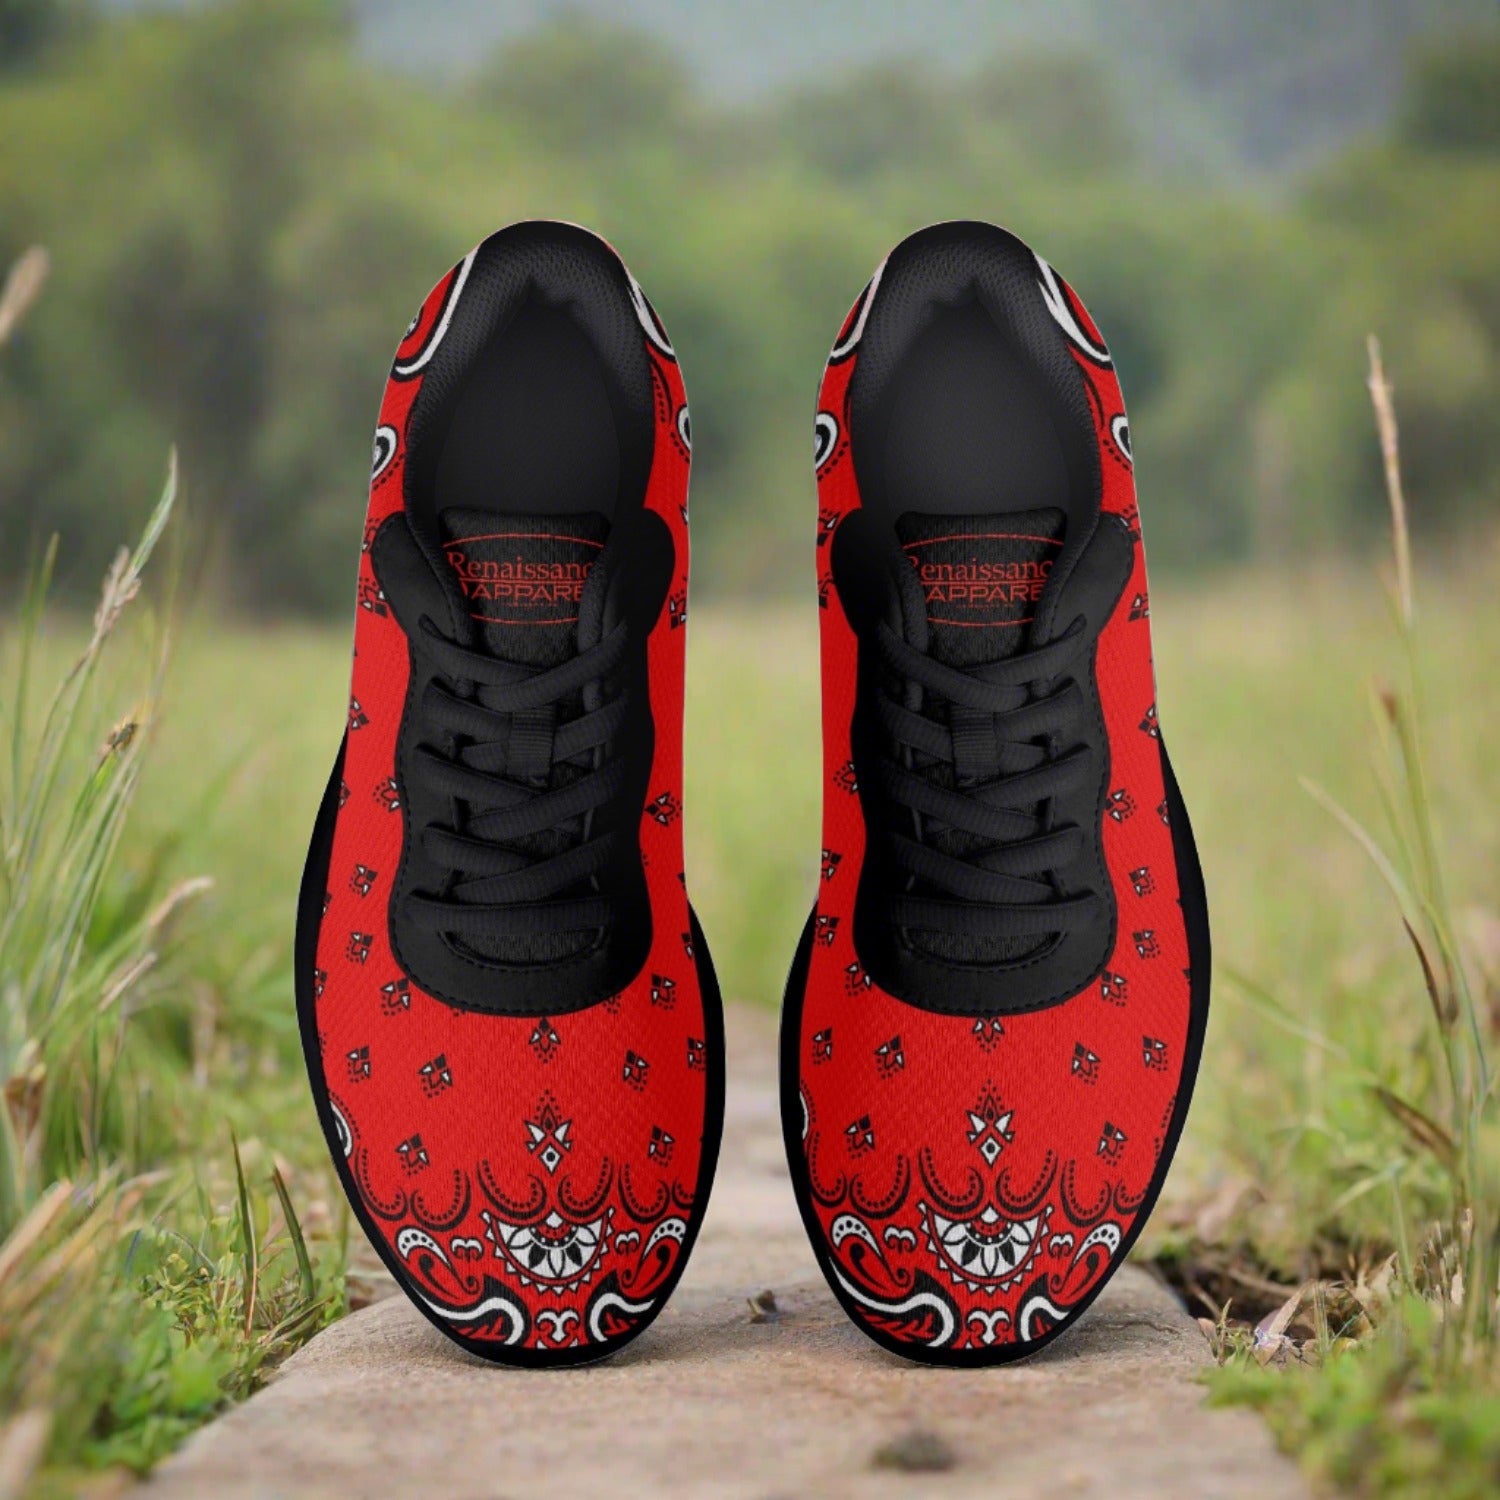 Red Bandana Mesh Running Shoes - Black